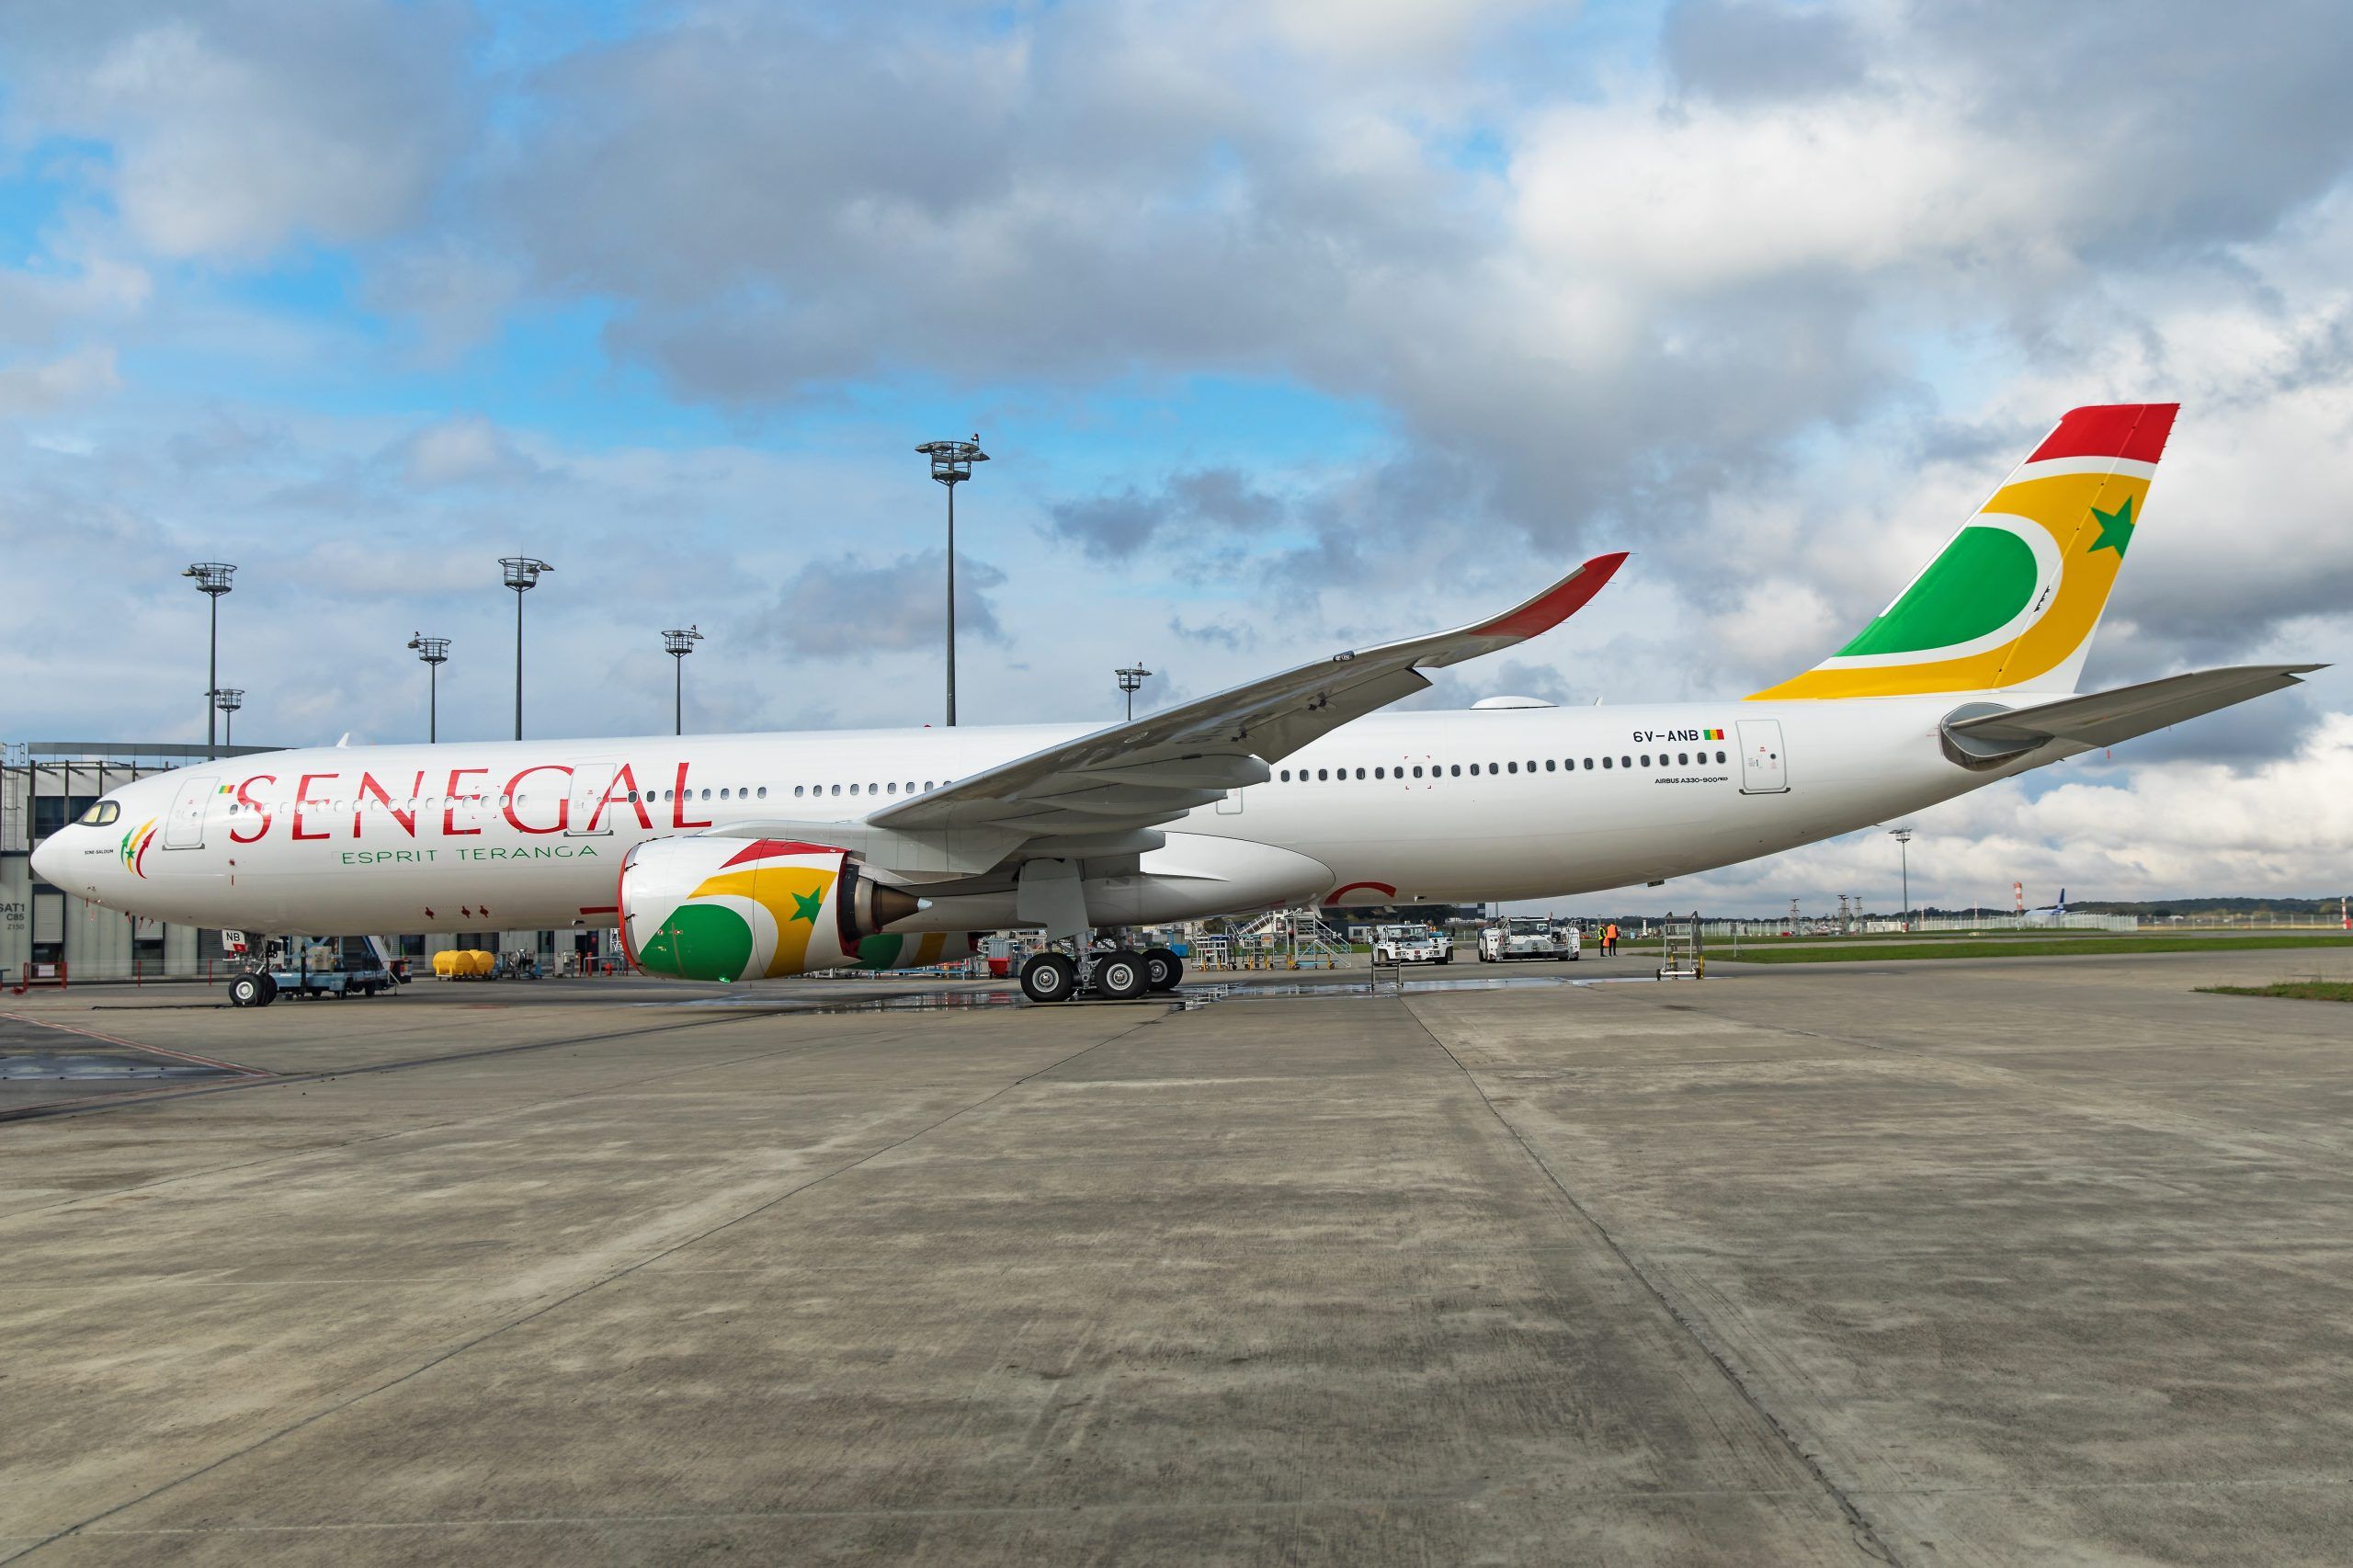 Dakar to New York City and Washington on Air Senegal now